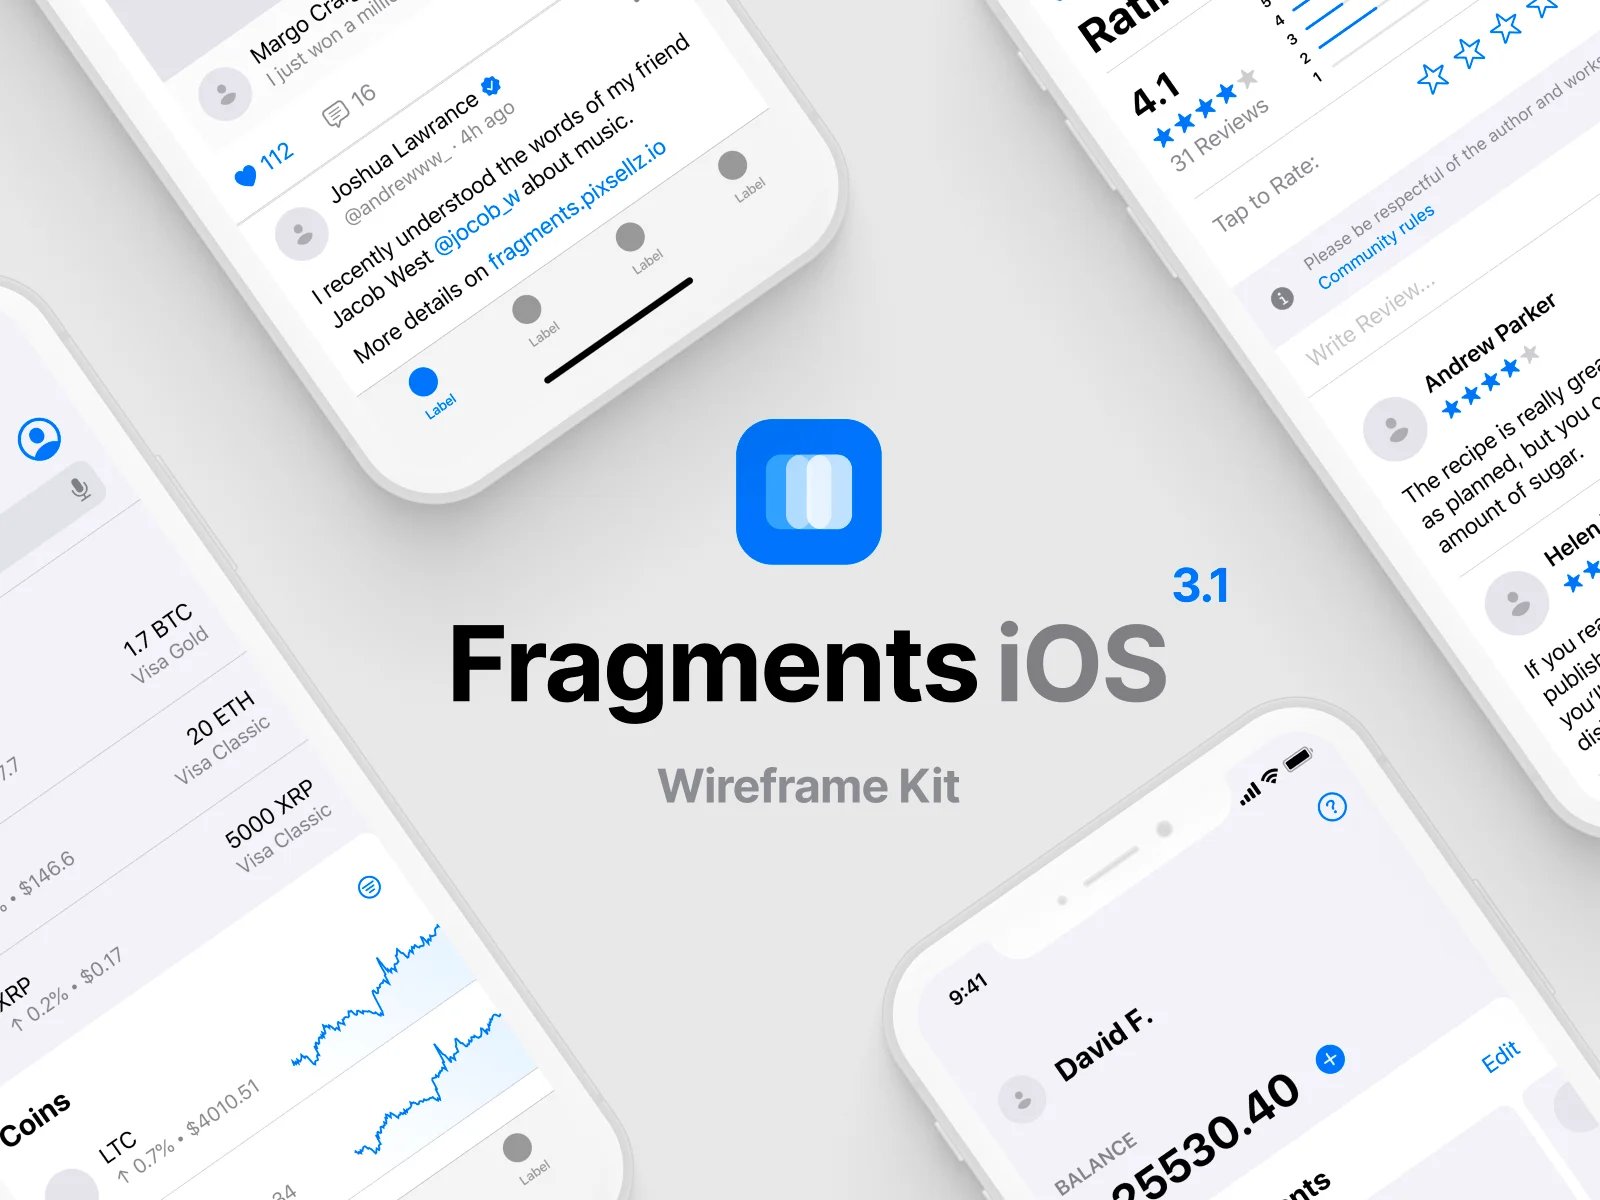 [PRO] Fragments iOS Wireframe Kit